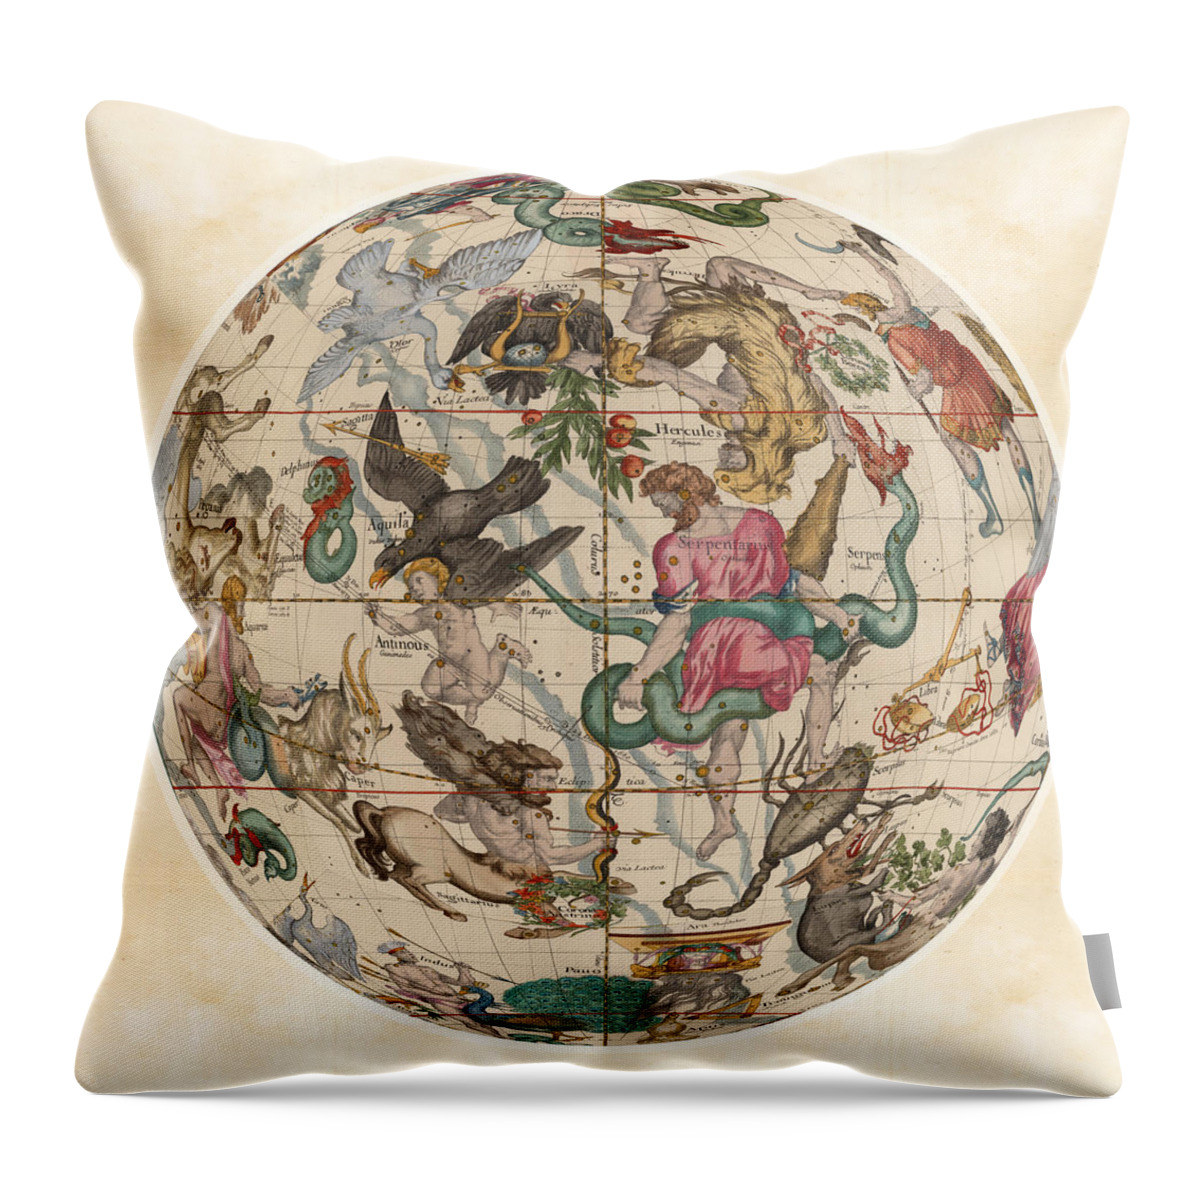 Celestial Map Throw Pillow featuring the drawing Celestial Map - Sagittarius, Scorpio, Serpentarius, Hercules - Illustrated map of the Sky by Studio Grafiikka